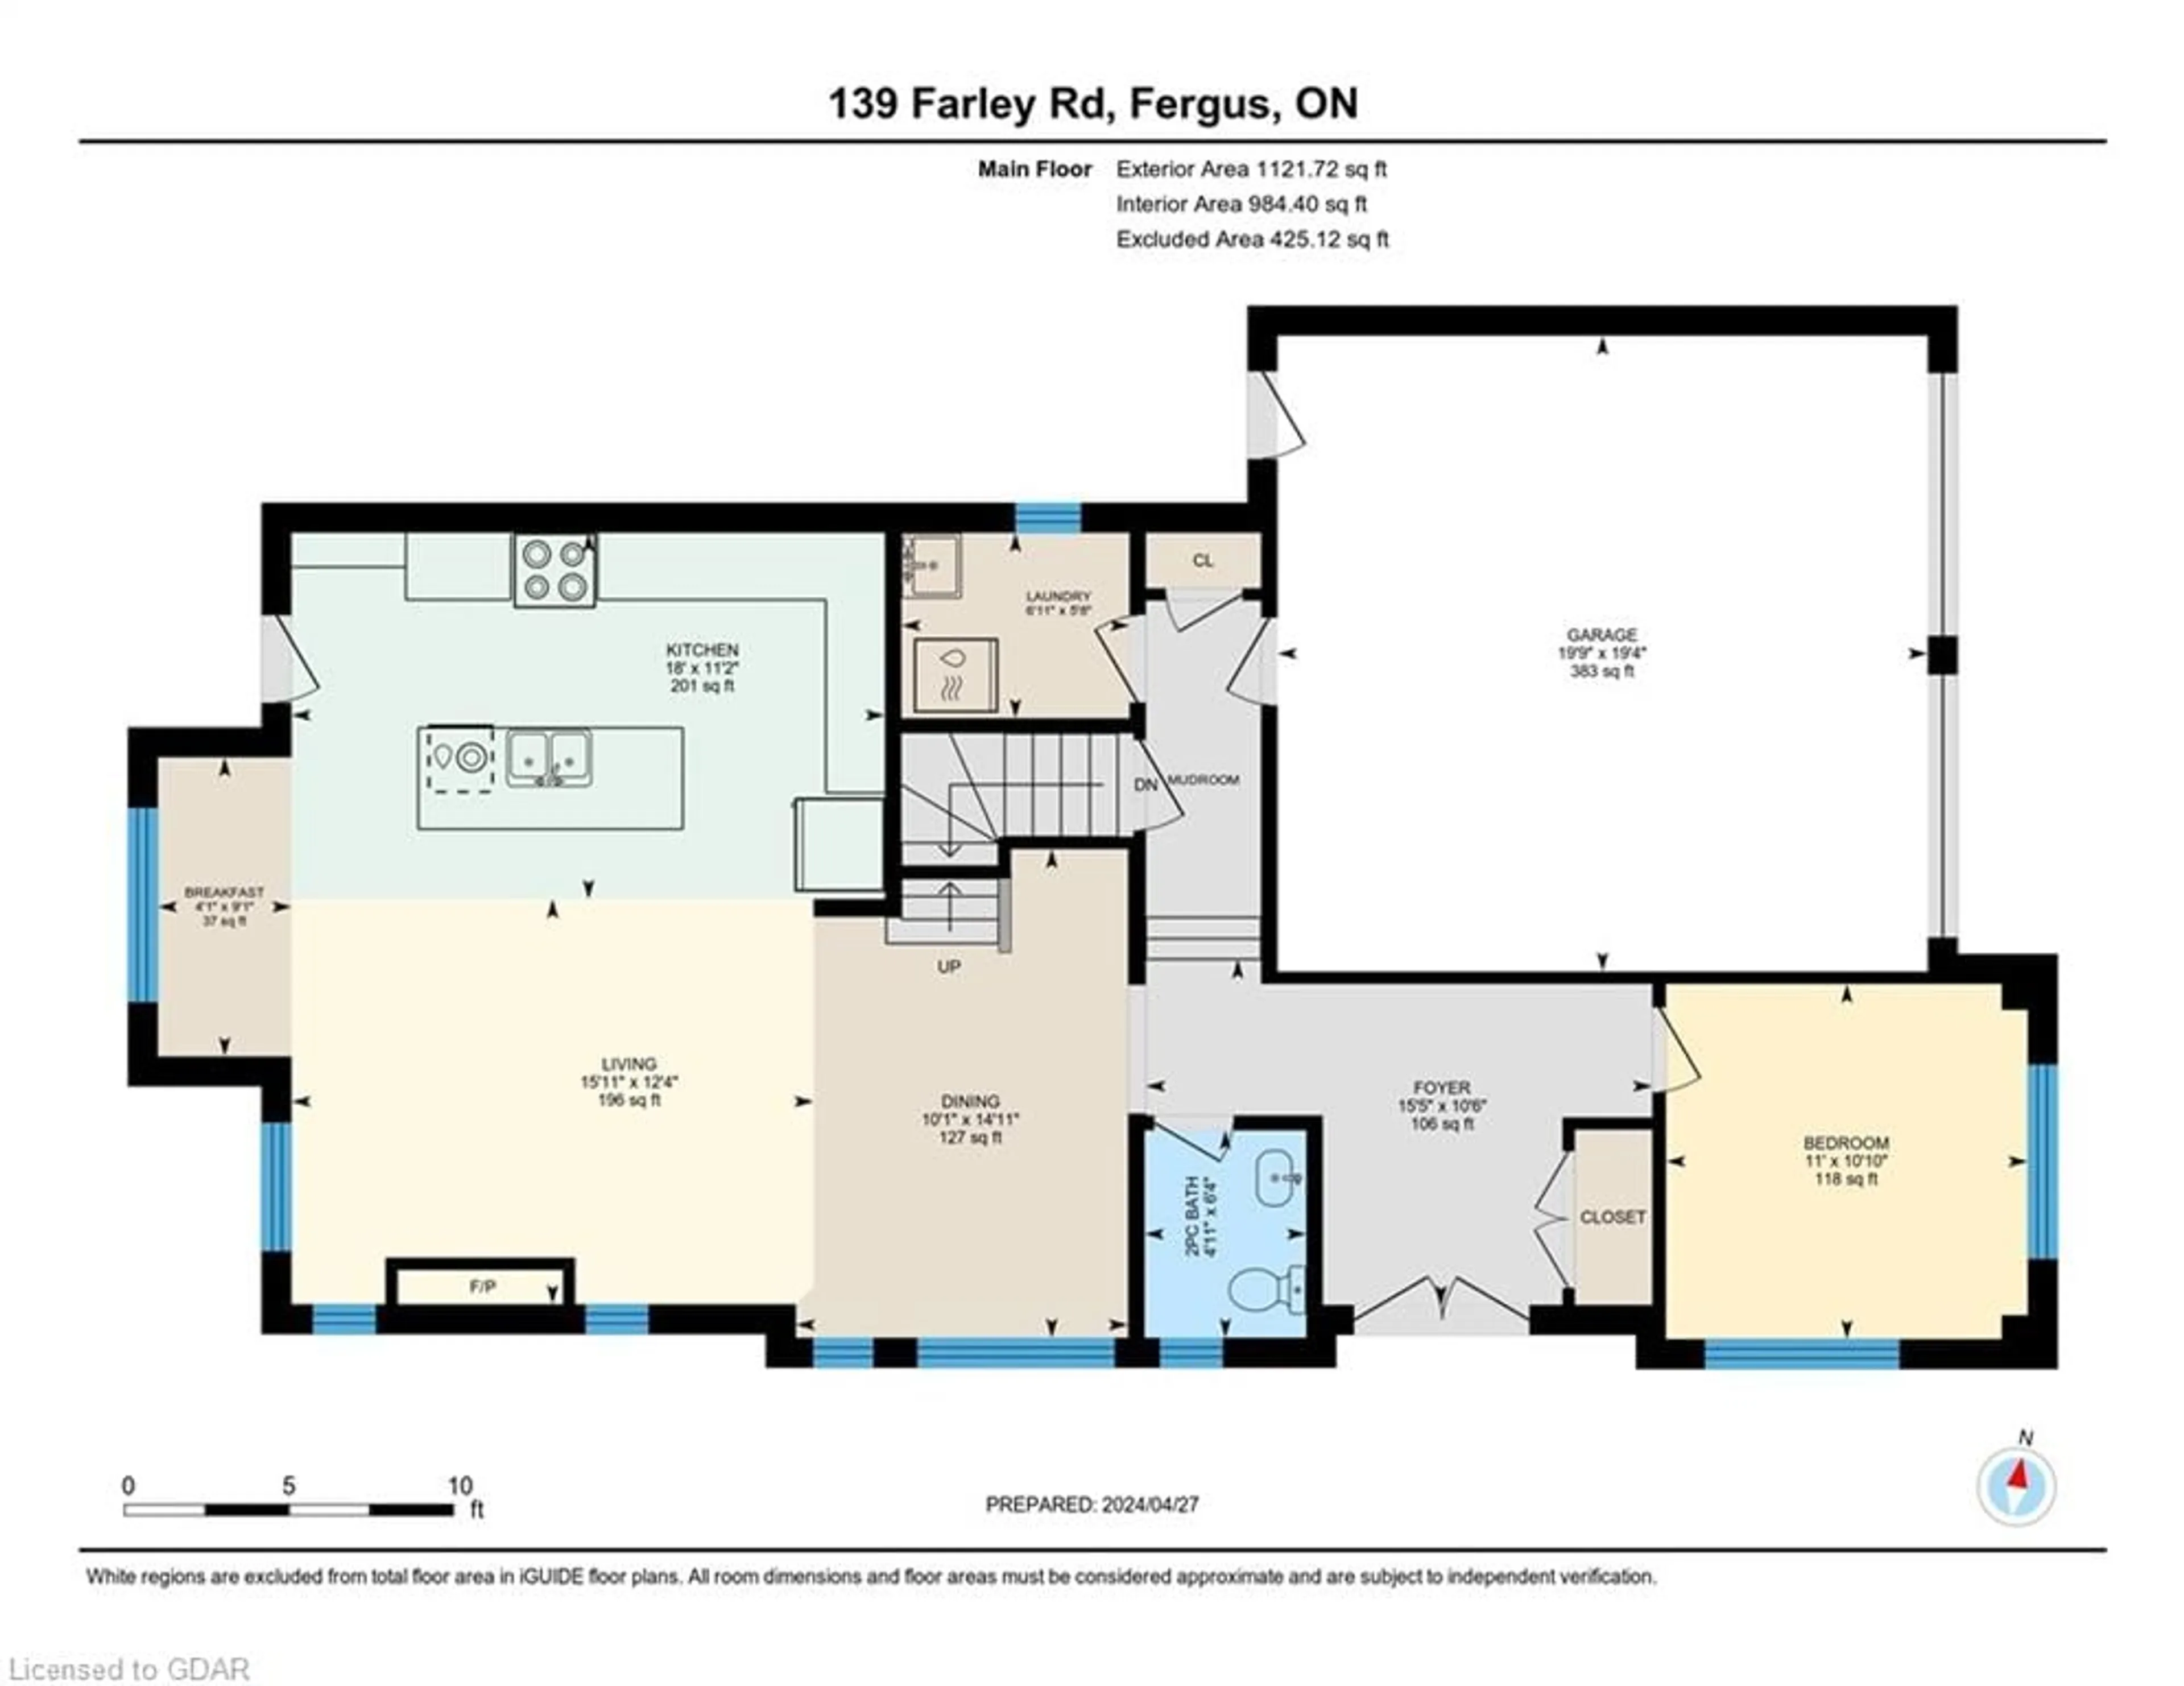 Floor plan for 139 Farley Rd, Fergus Ontario N0B 1S0